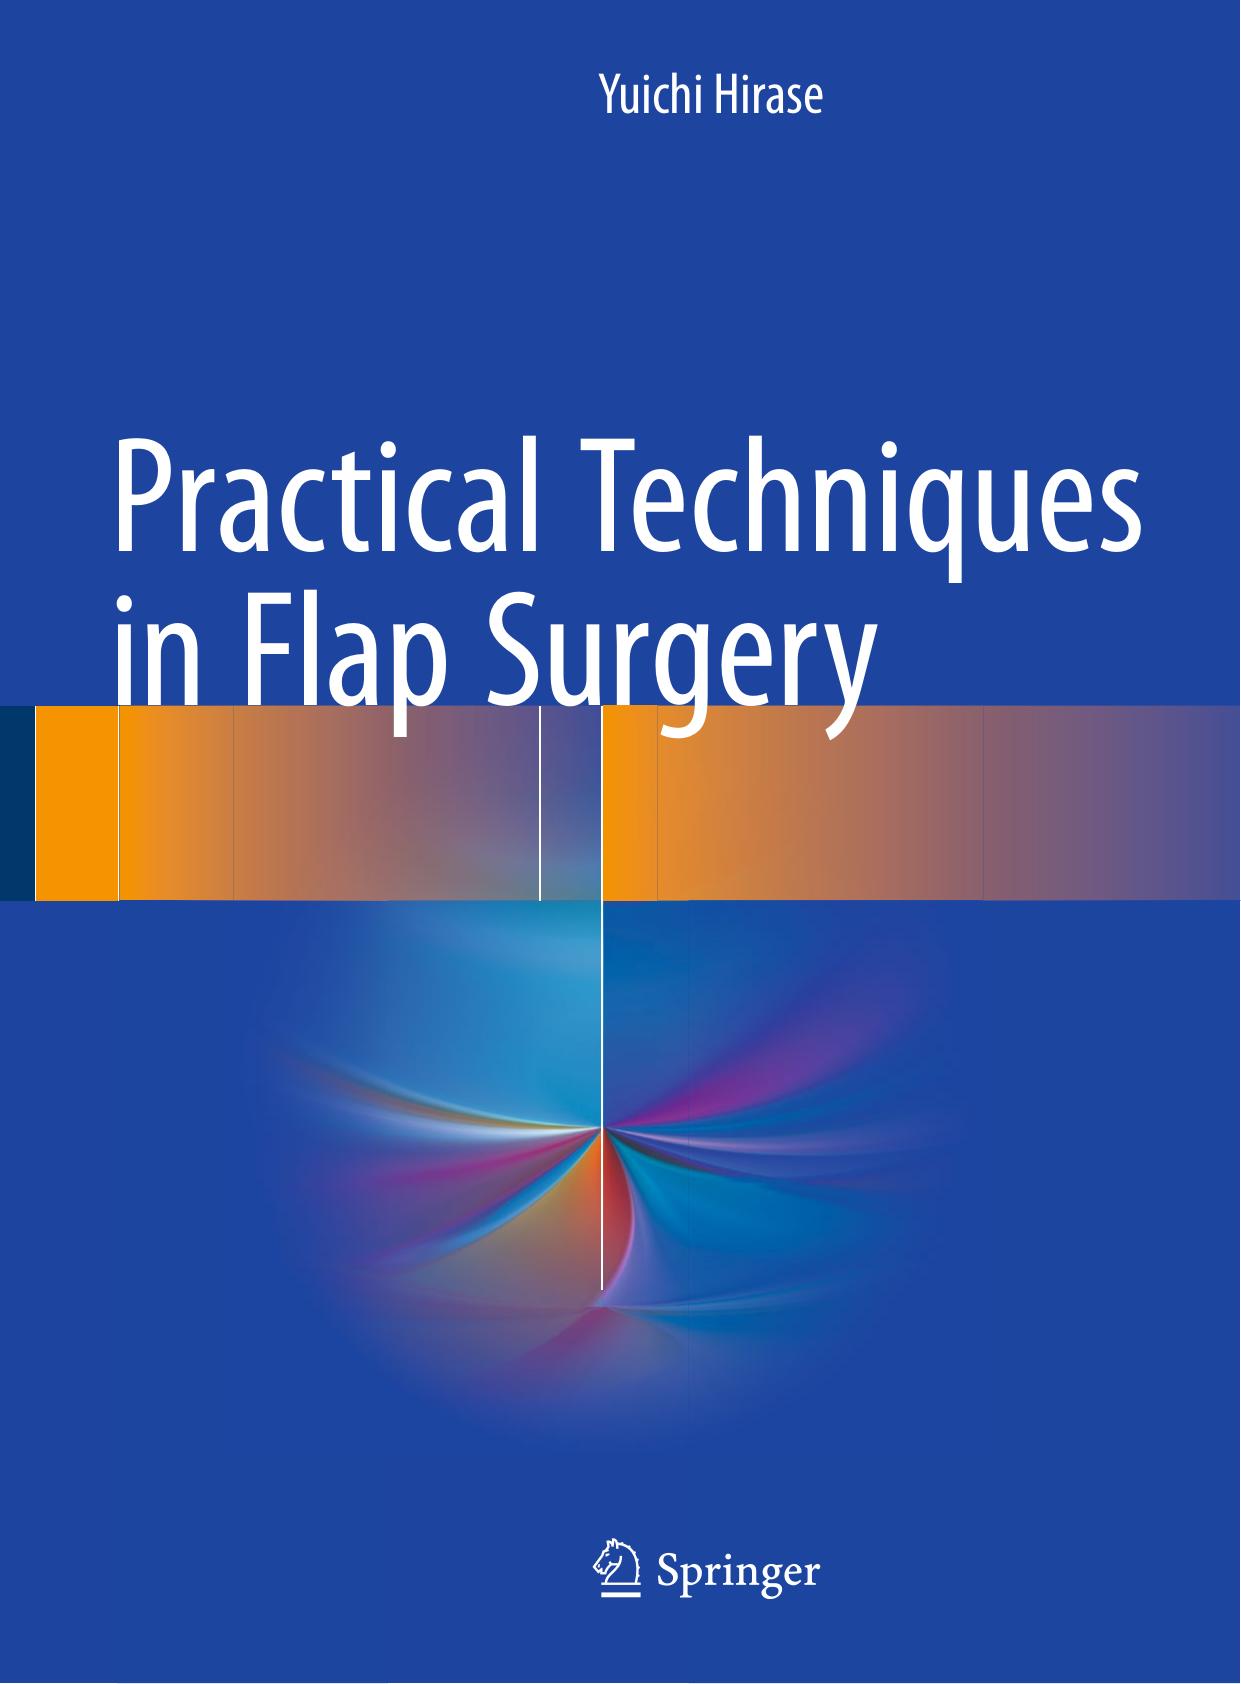 Practical Techniques in Flap Surgery ( PDFDrive.com )